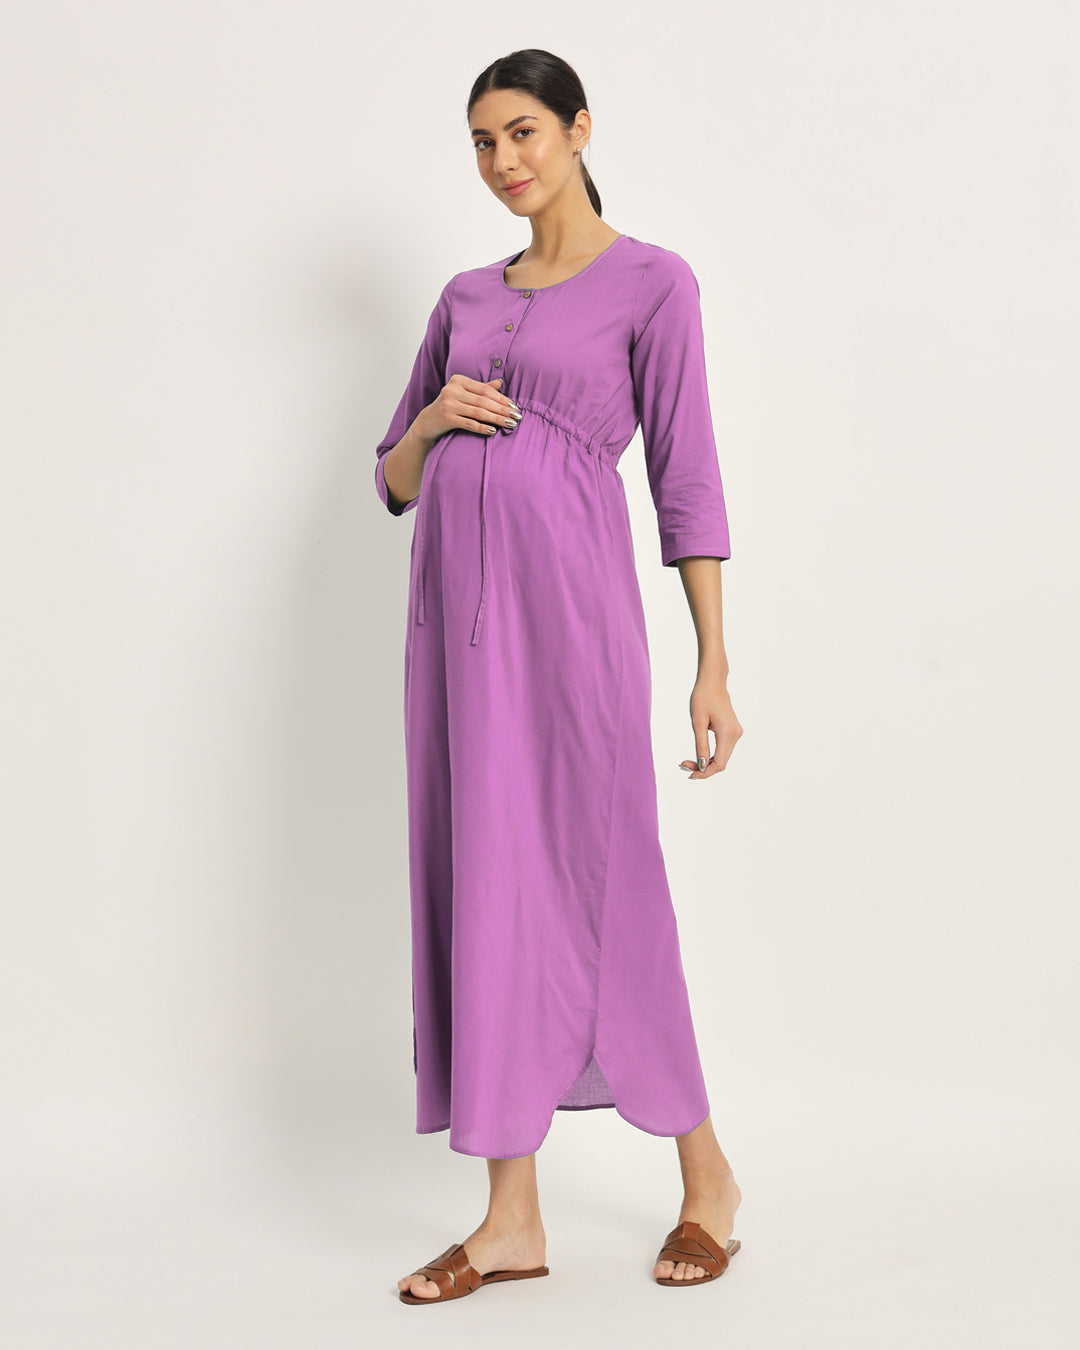 Combo: Iris Pink & Wisteria Purple Oh Mama! Maternity & Nursing Dress